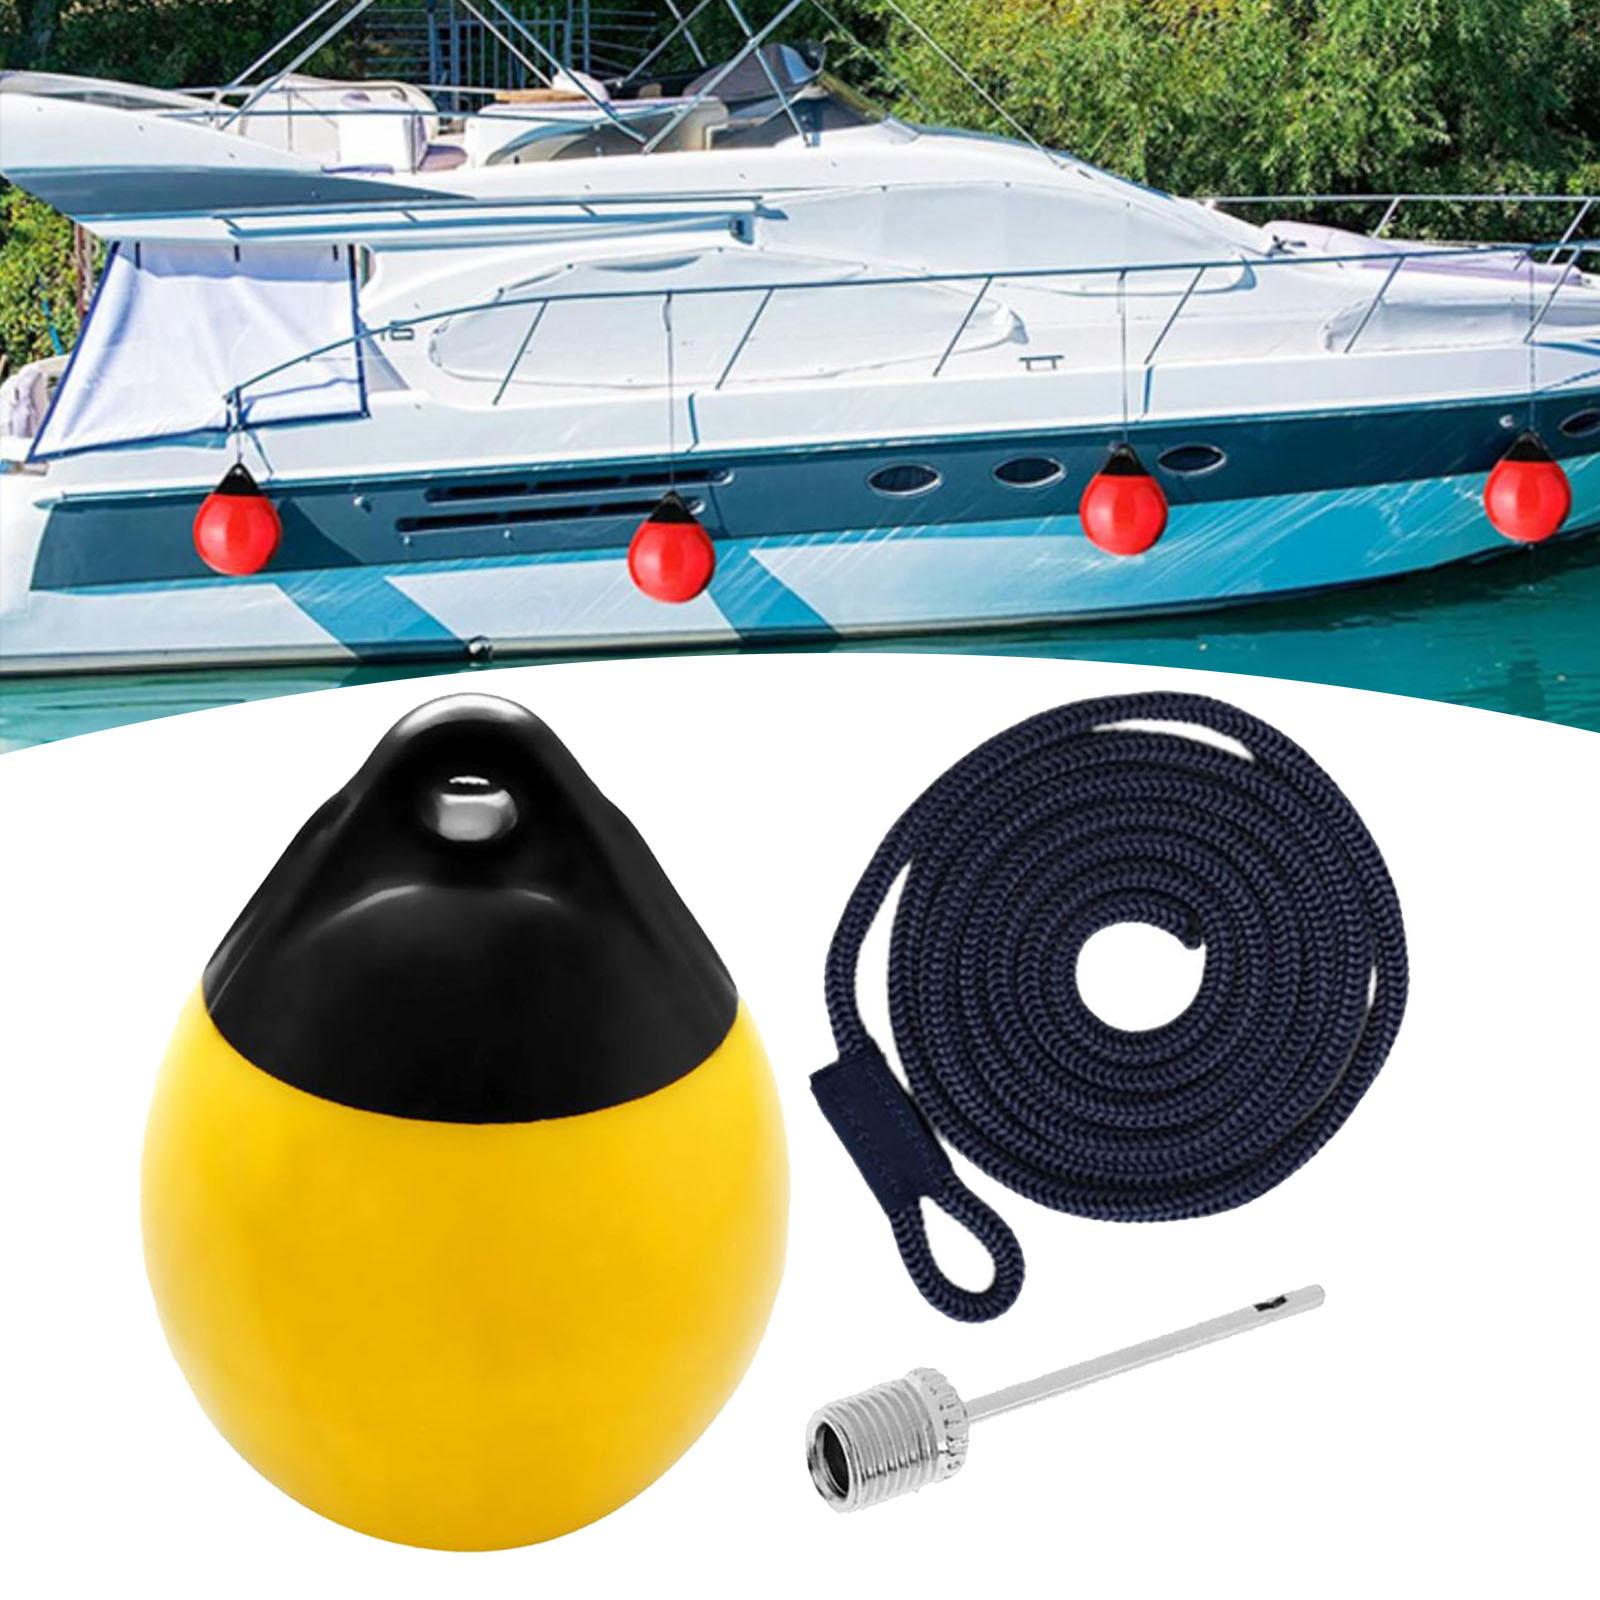 Boat Fender Ball Dock Edge Docking Anchor Buoy for Yacht Sailboats Row Boats Yellow w Black Rope